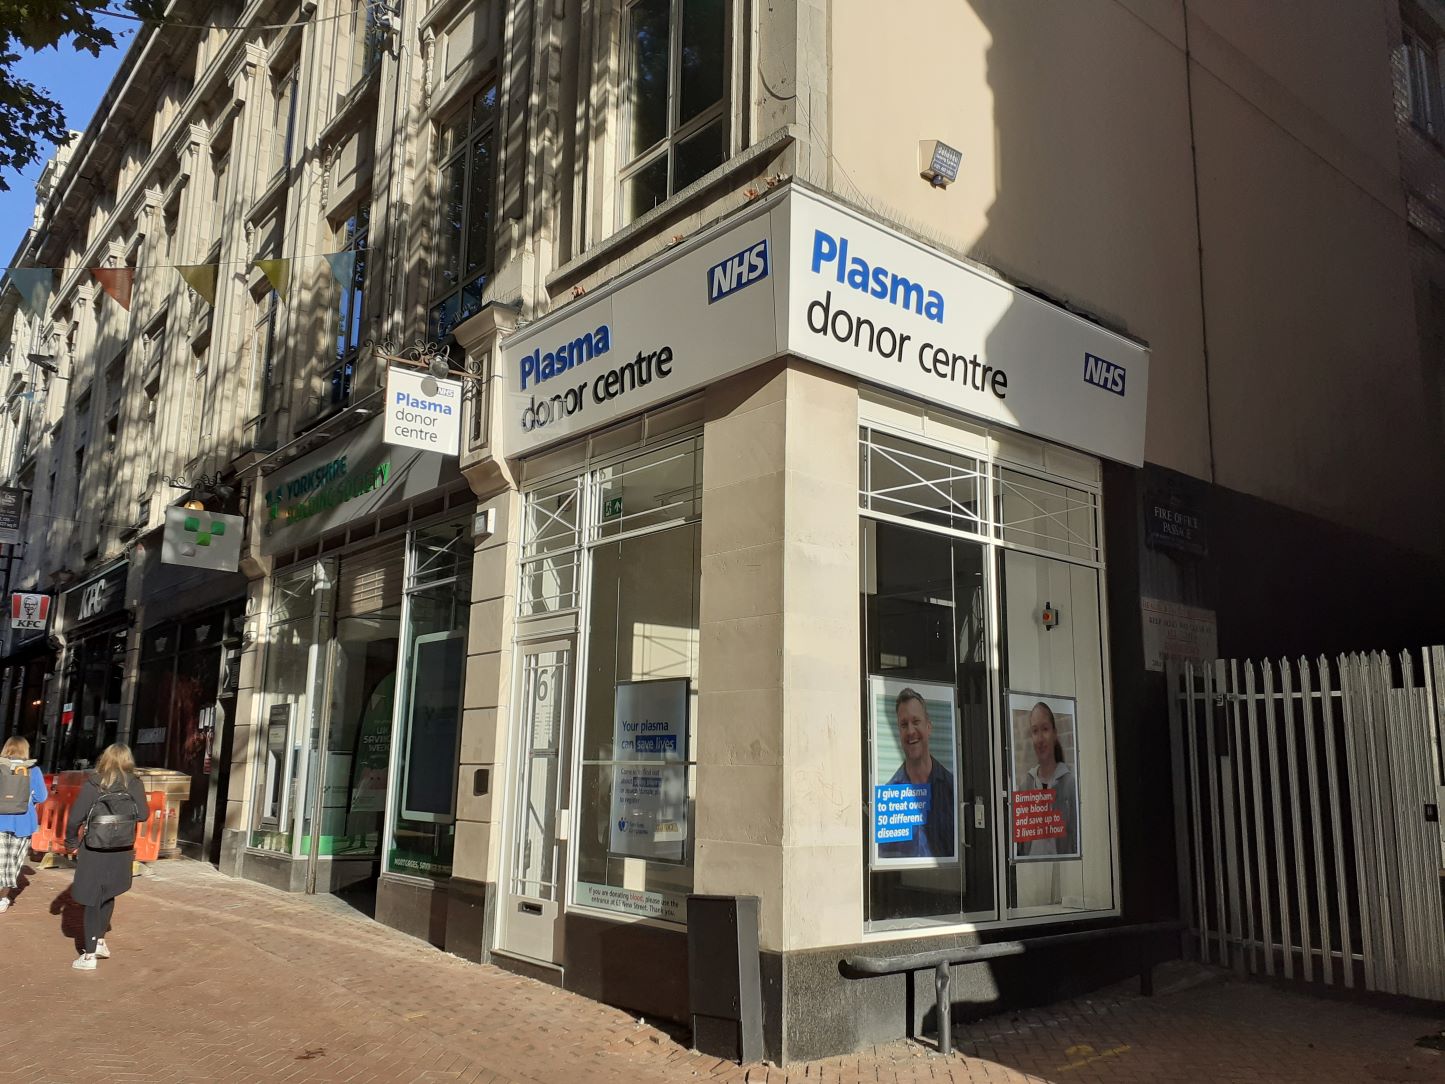 Birmingham Plasma Donor Centre's new location